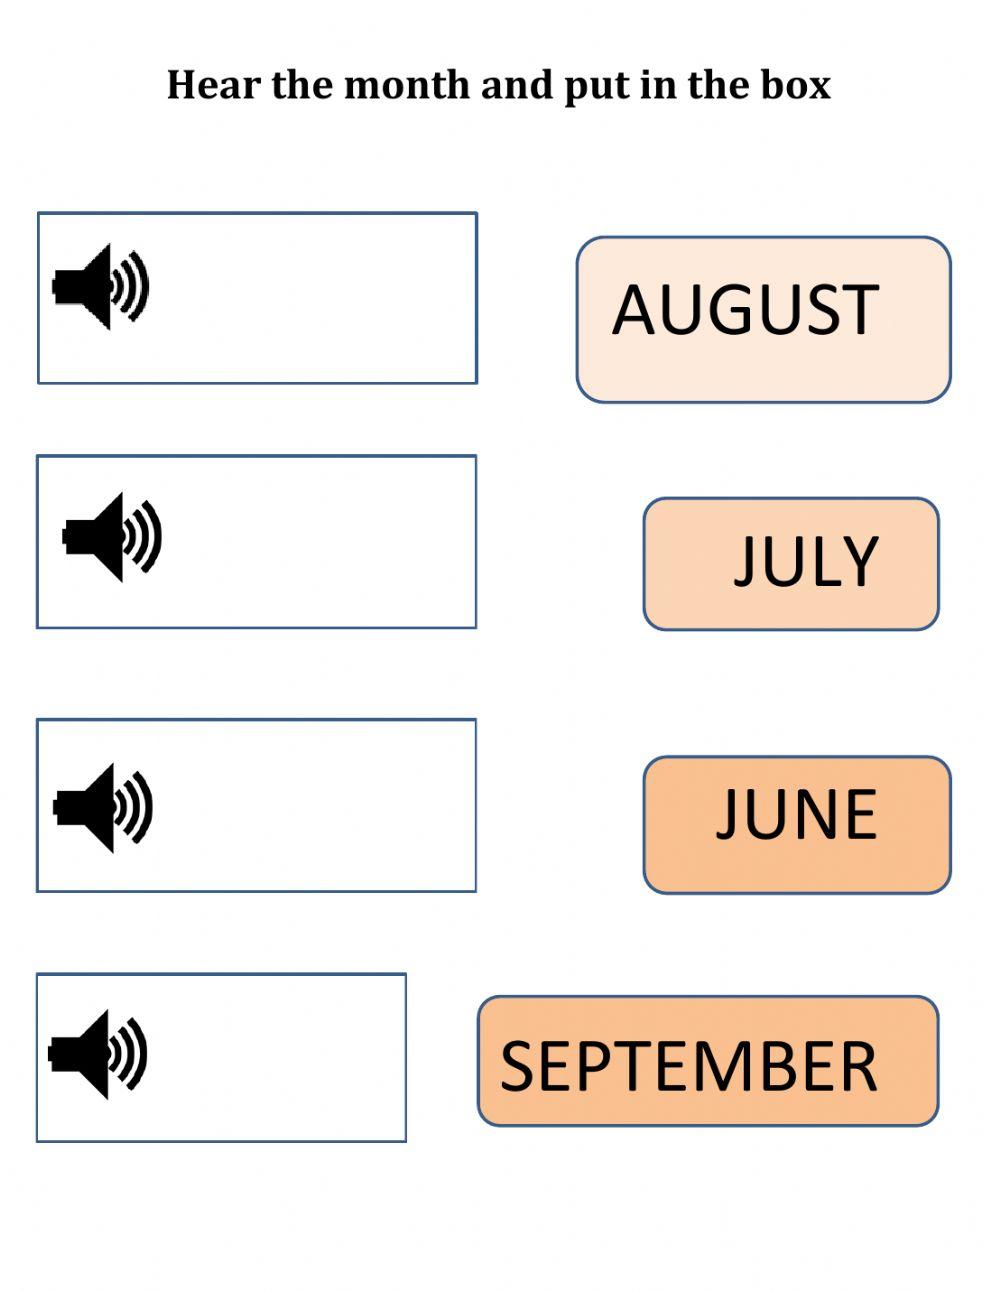 Months- June, July, August, September